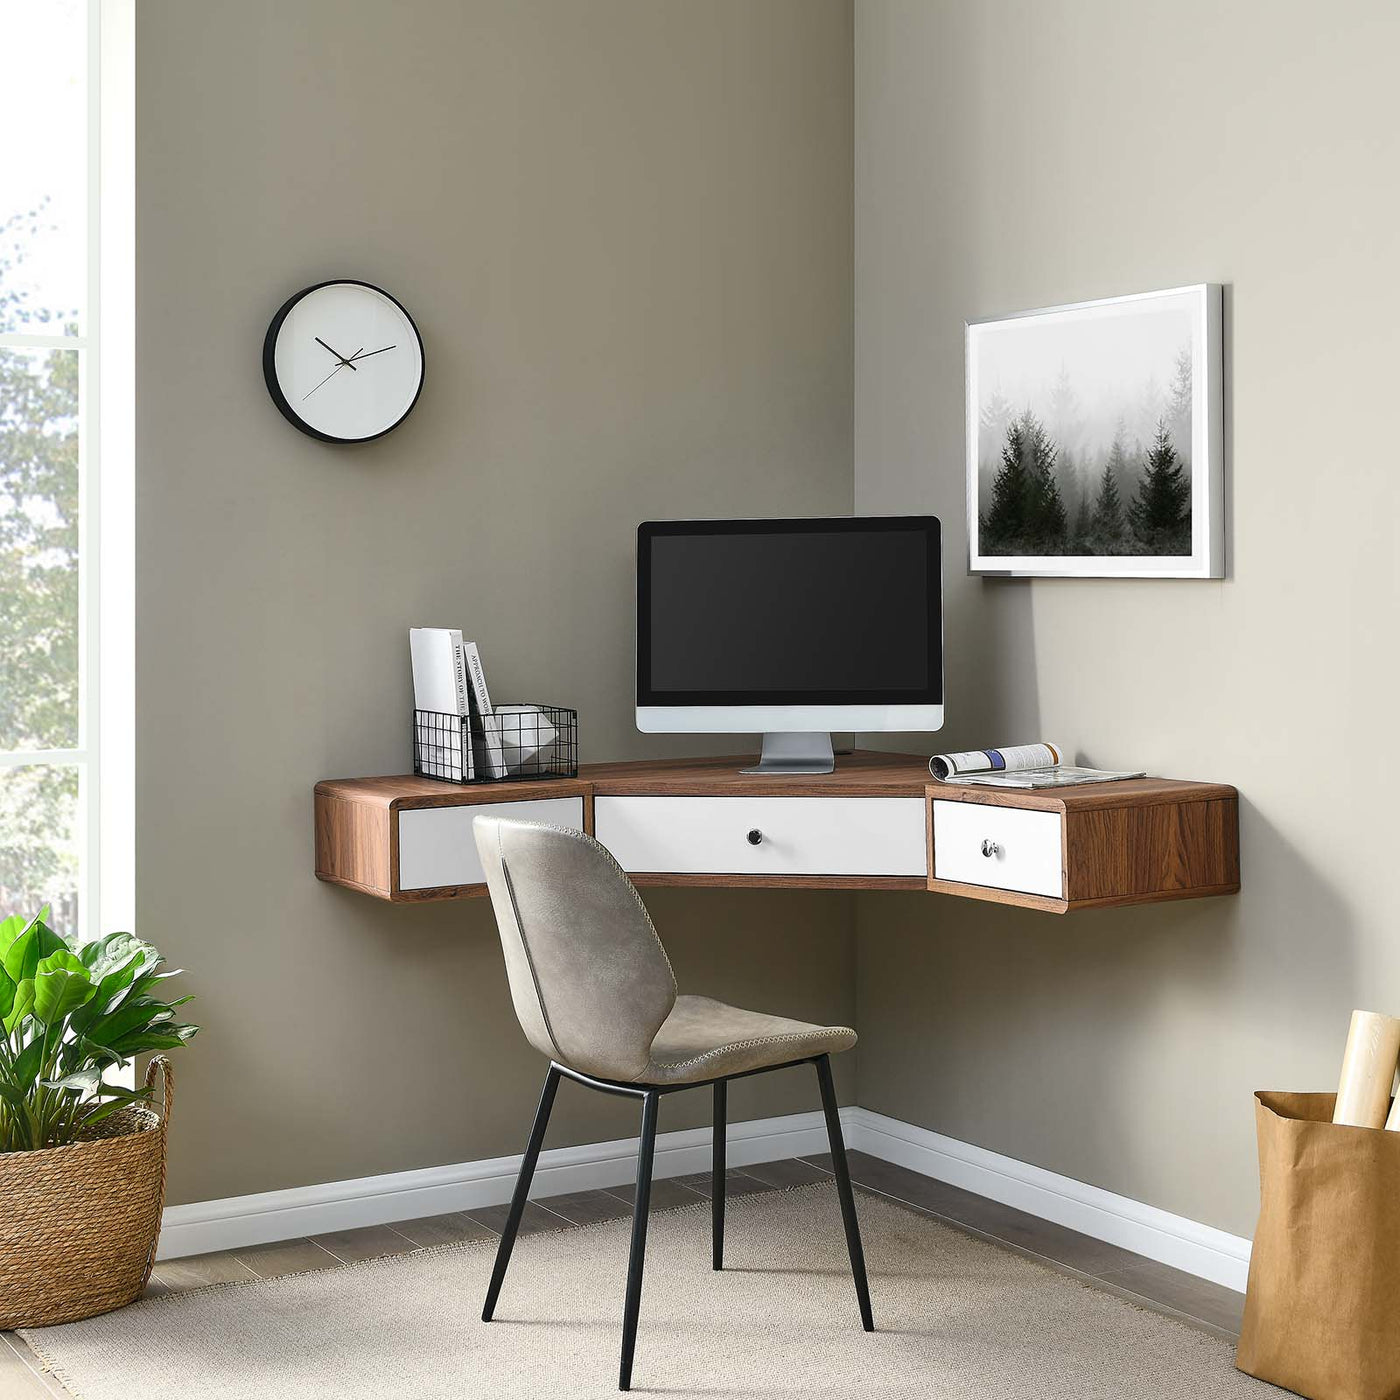 Computer Desks: Shop Computer Desks for Your Home Office